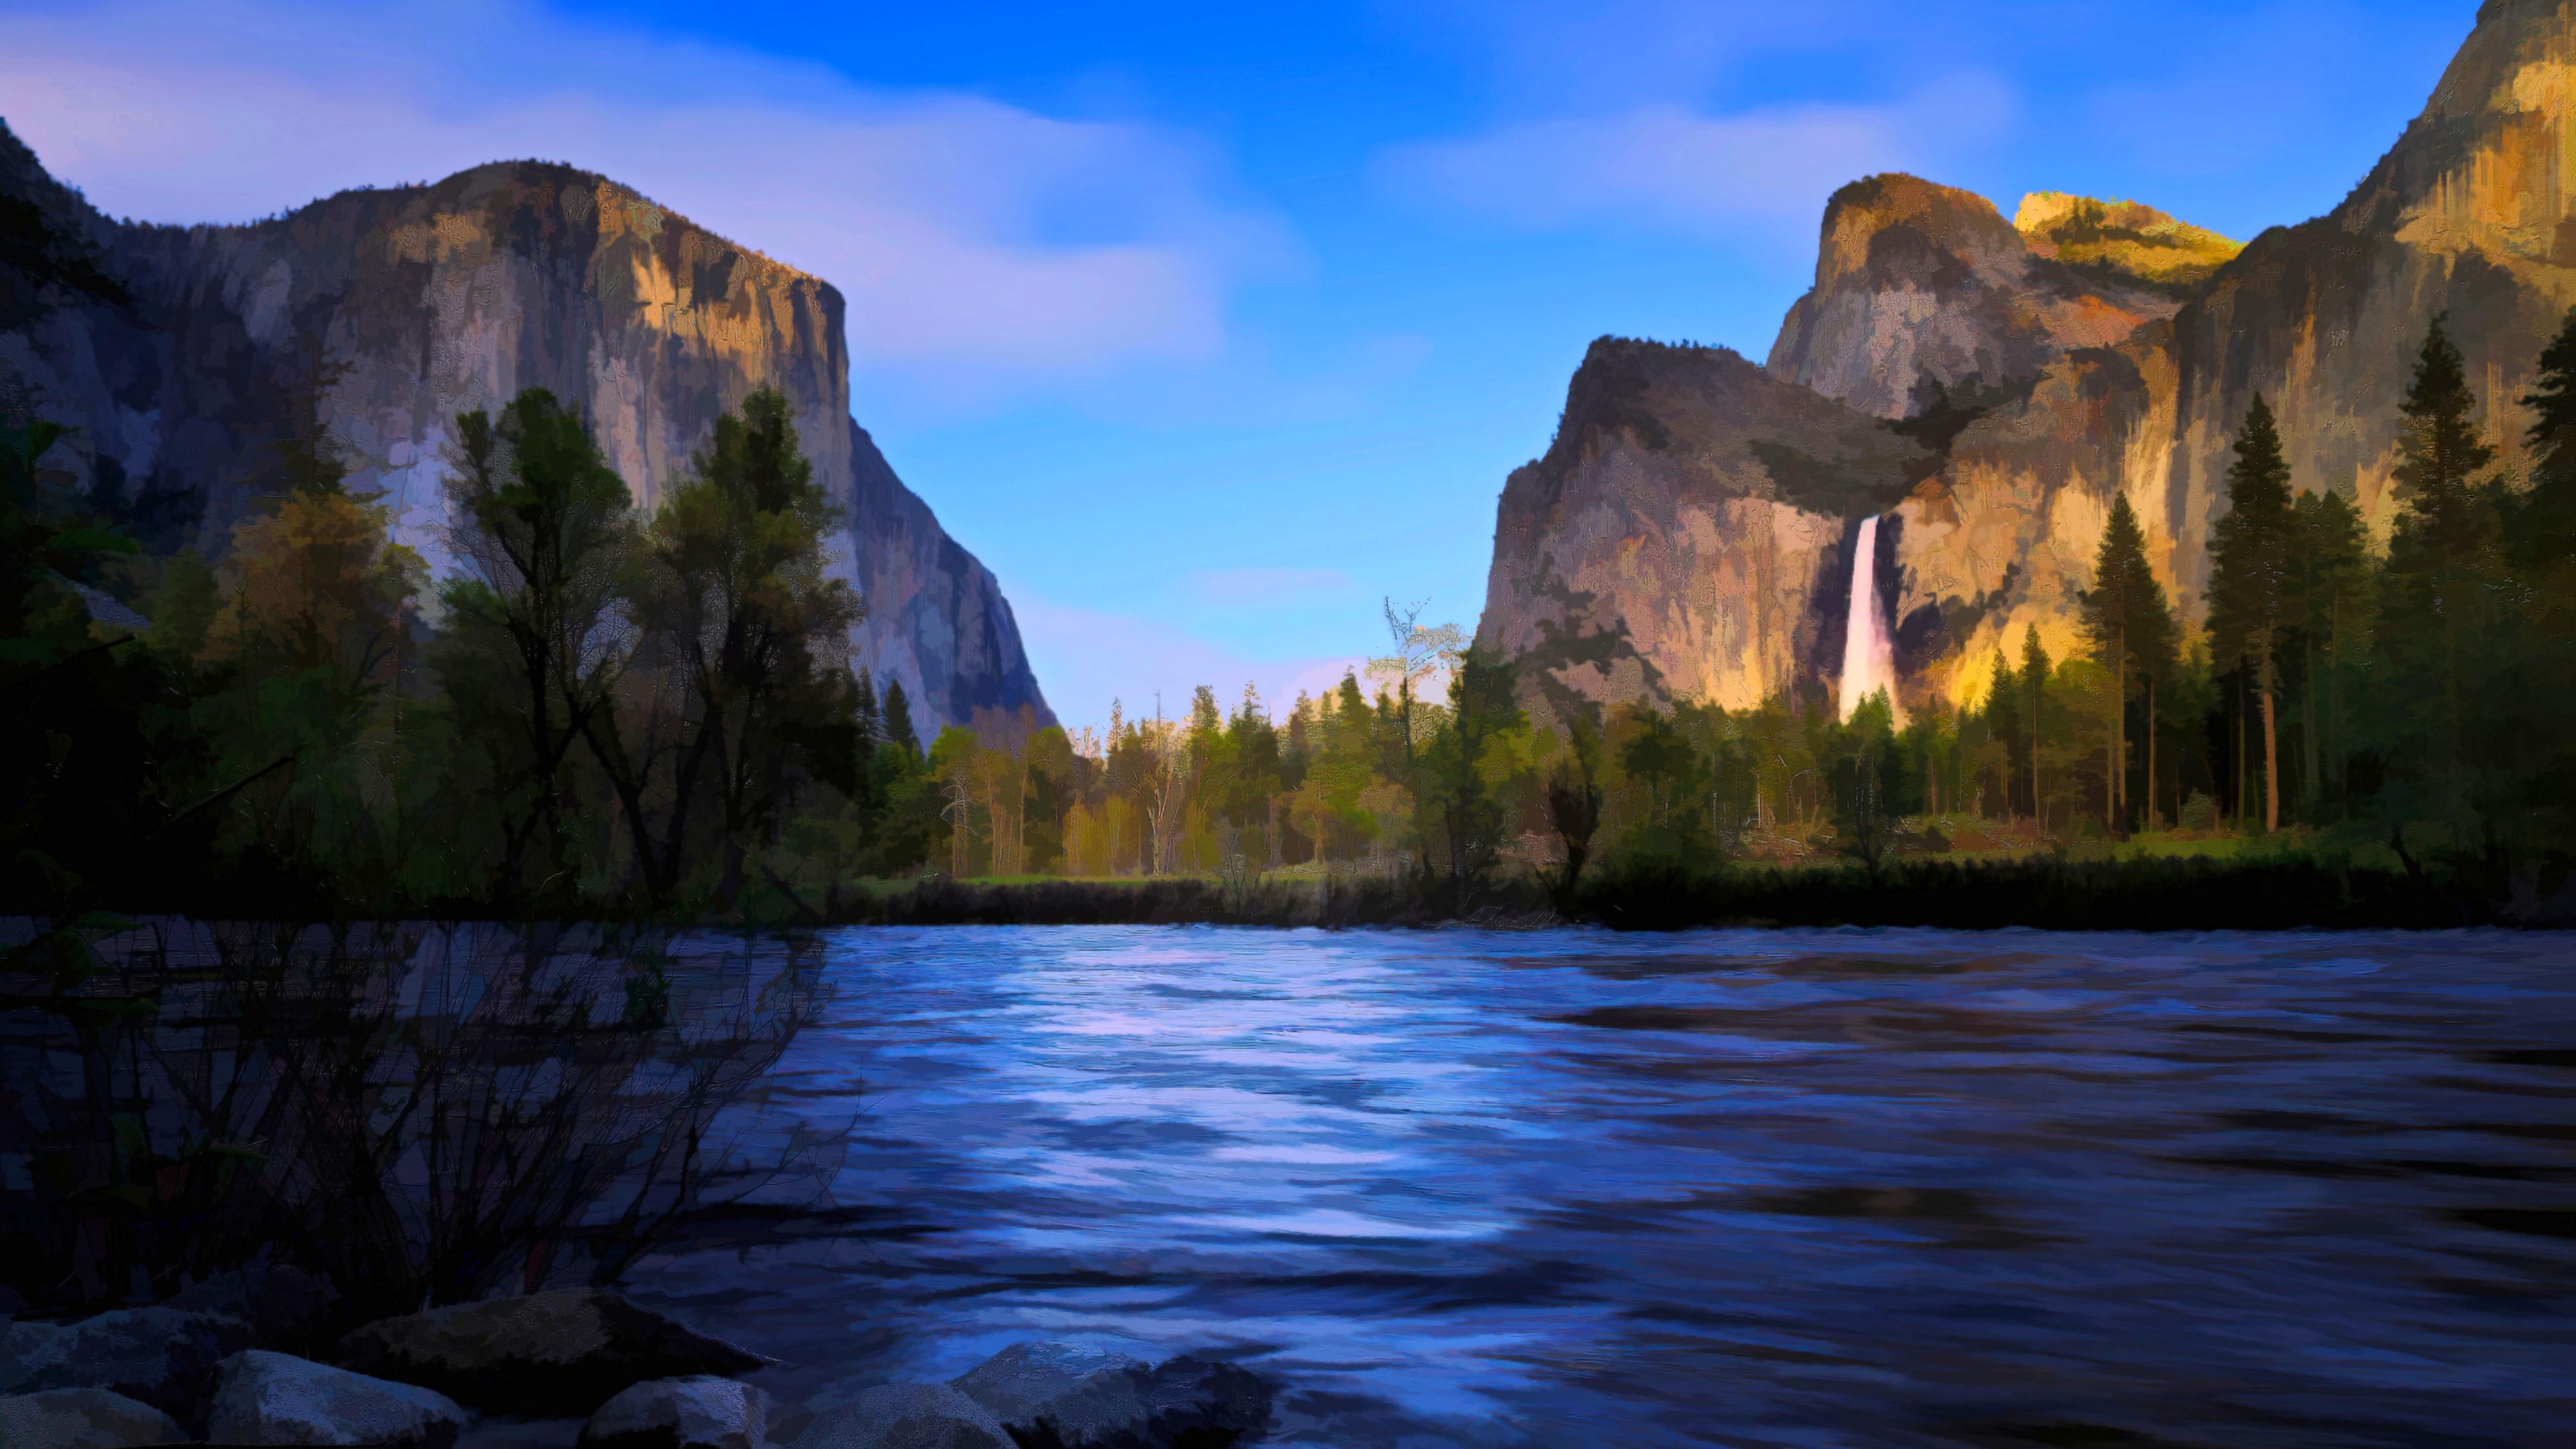 Yosemite 4K wallpaper for your desktop .free4kwallpaper.com